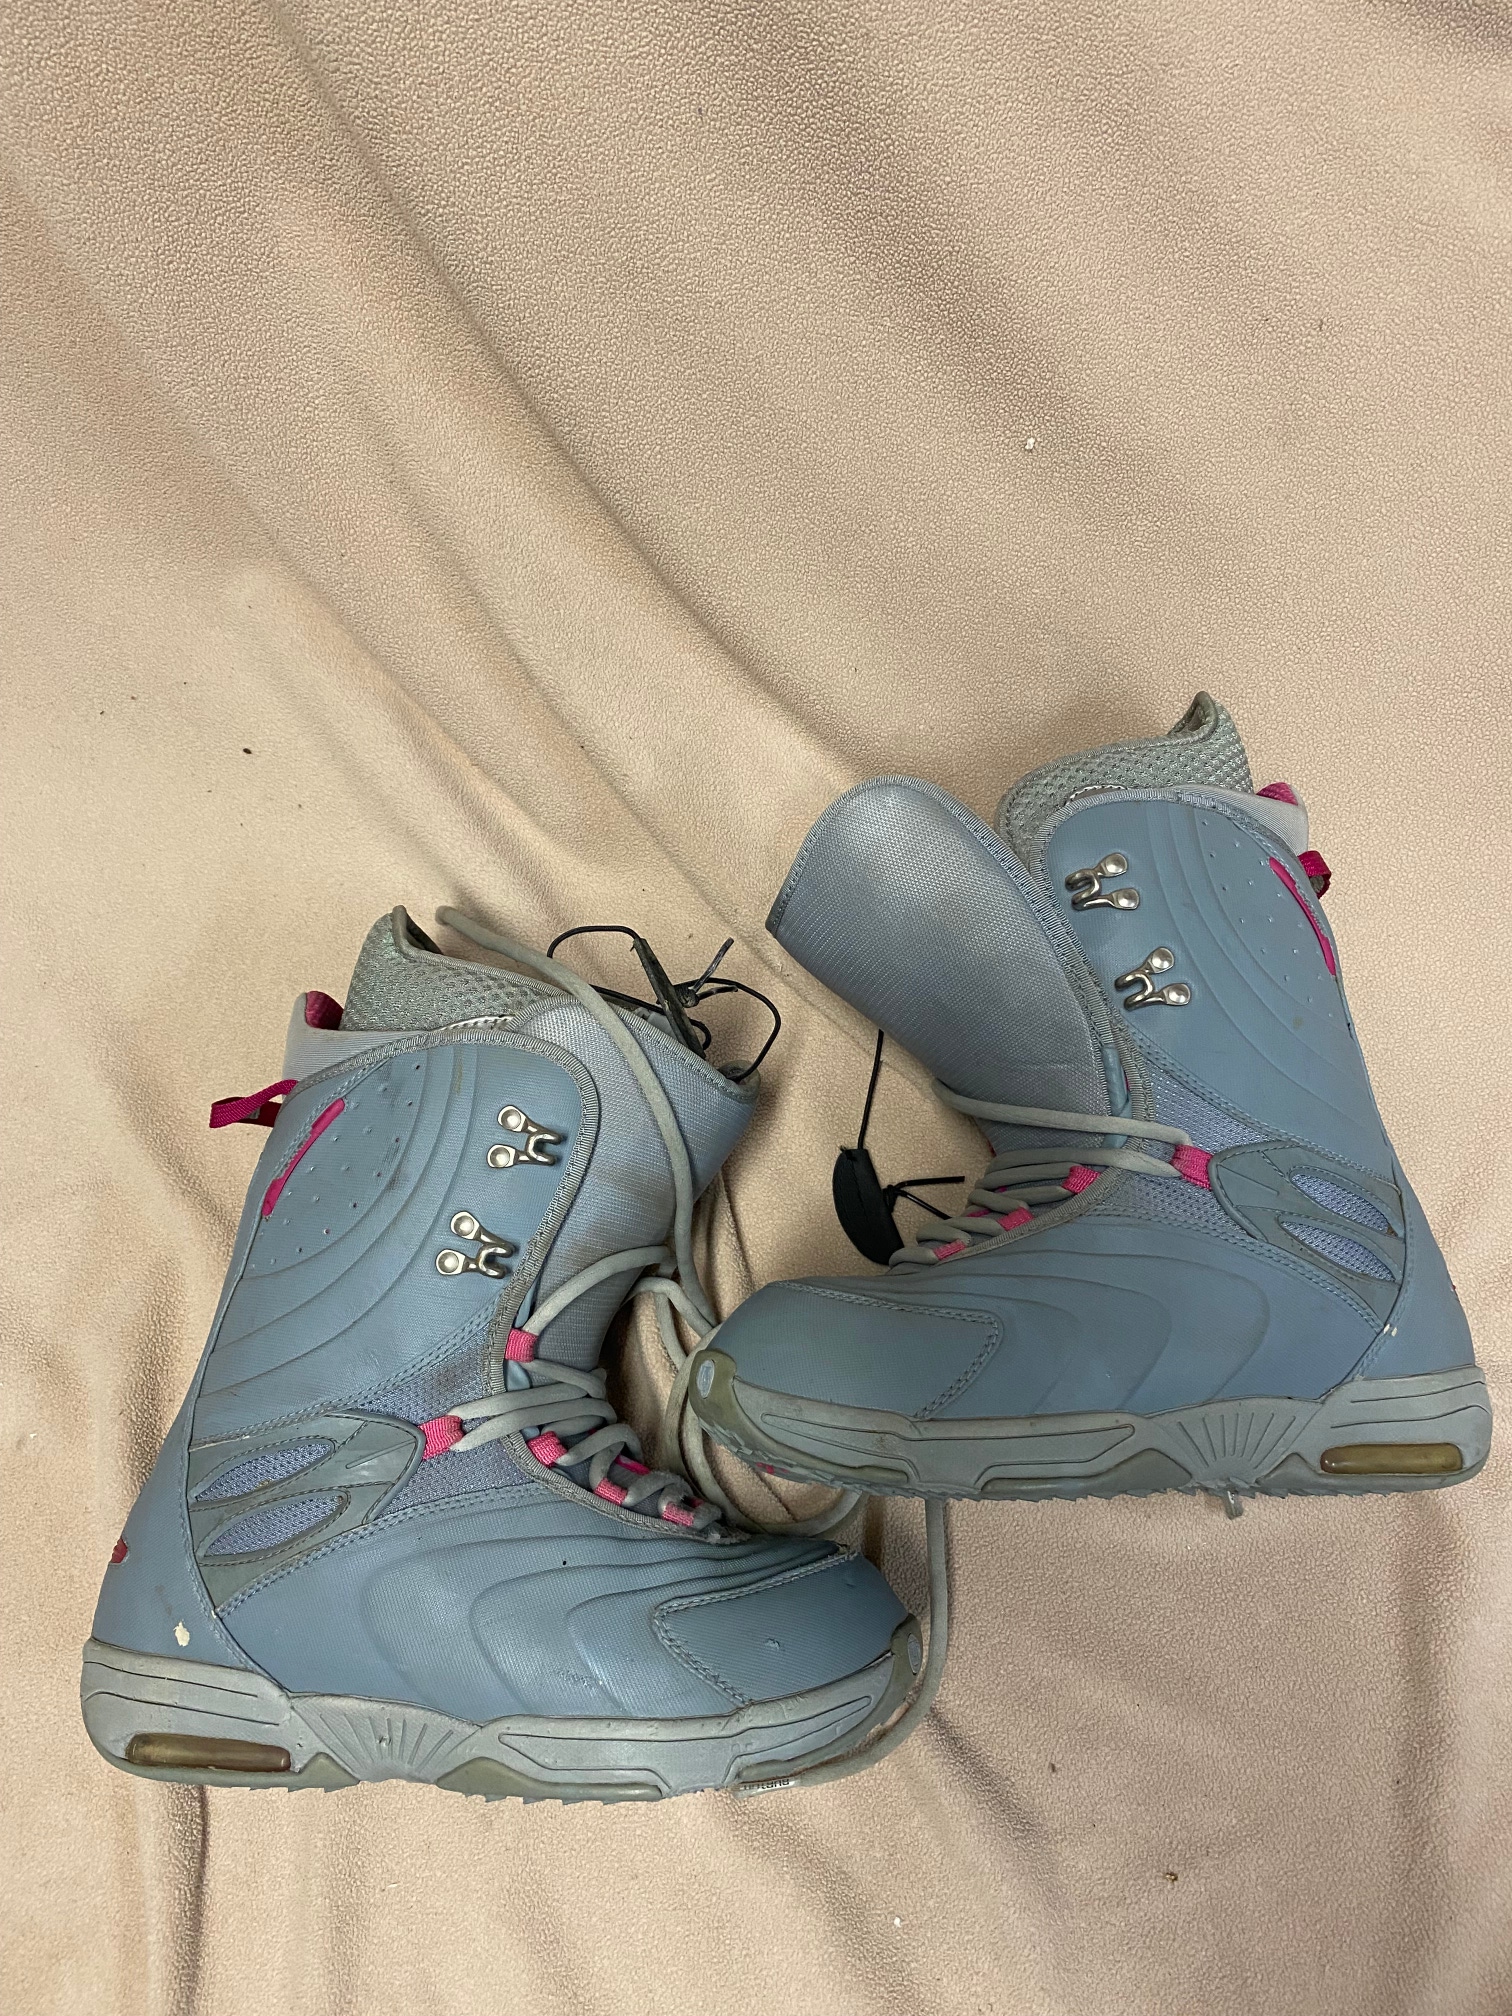 Women's Used Size 8.5 (Women's 9.5) Burton Sapphire Snowboard Boots All Mountain